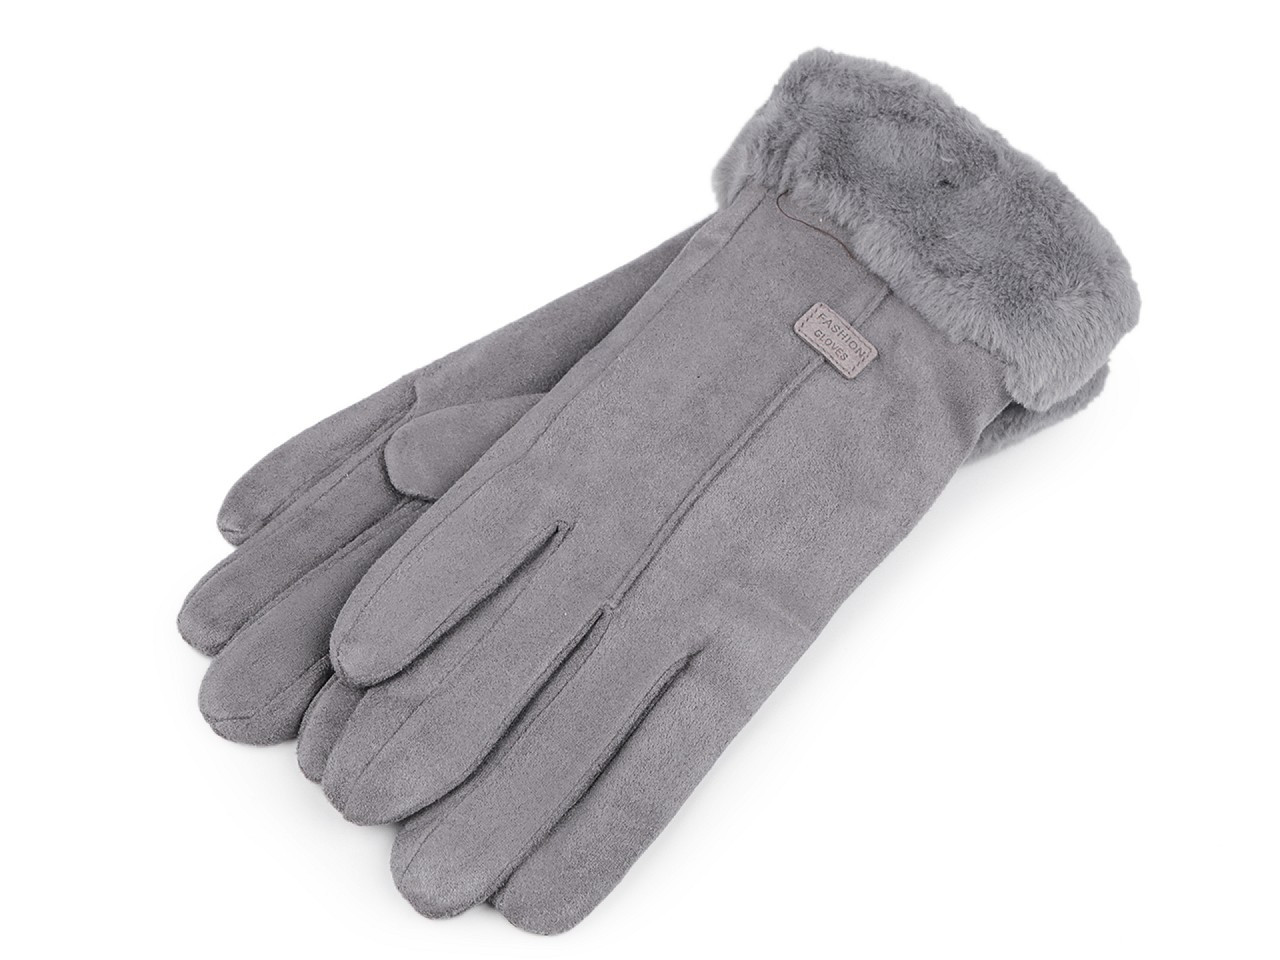 Dámské rukavice s kožešinou, dotykové, barva 2 šedá